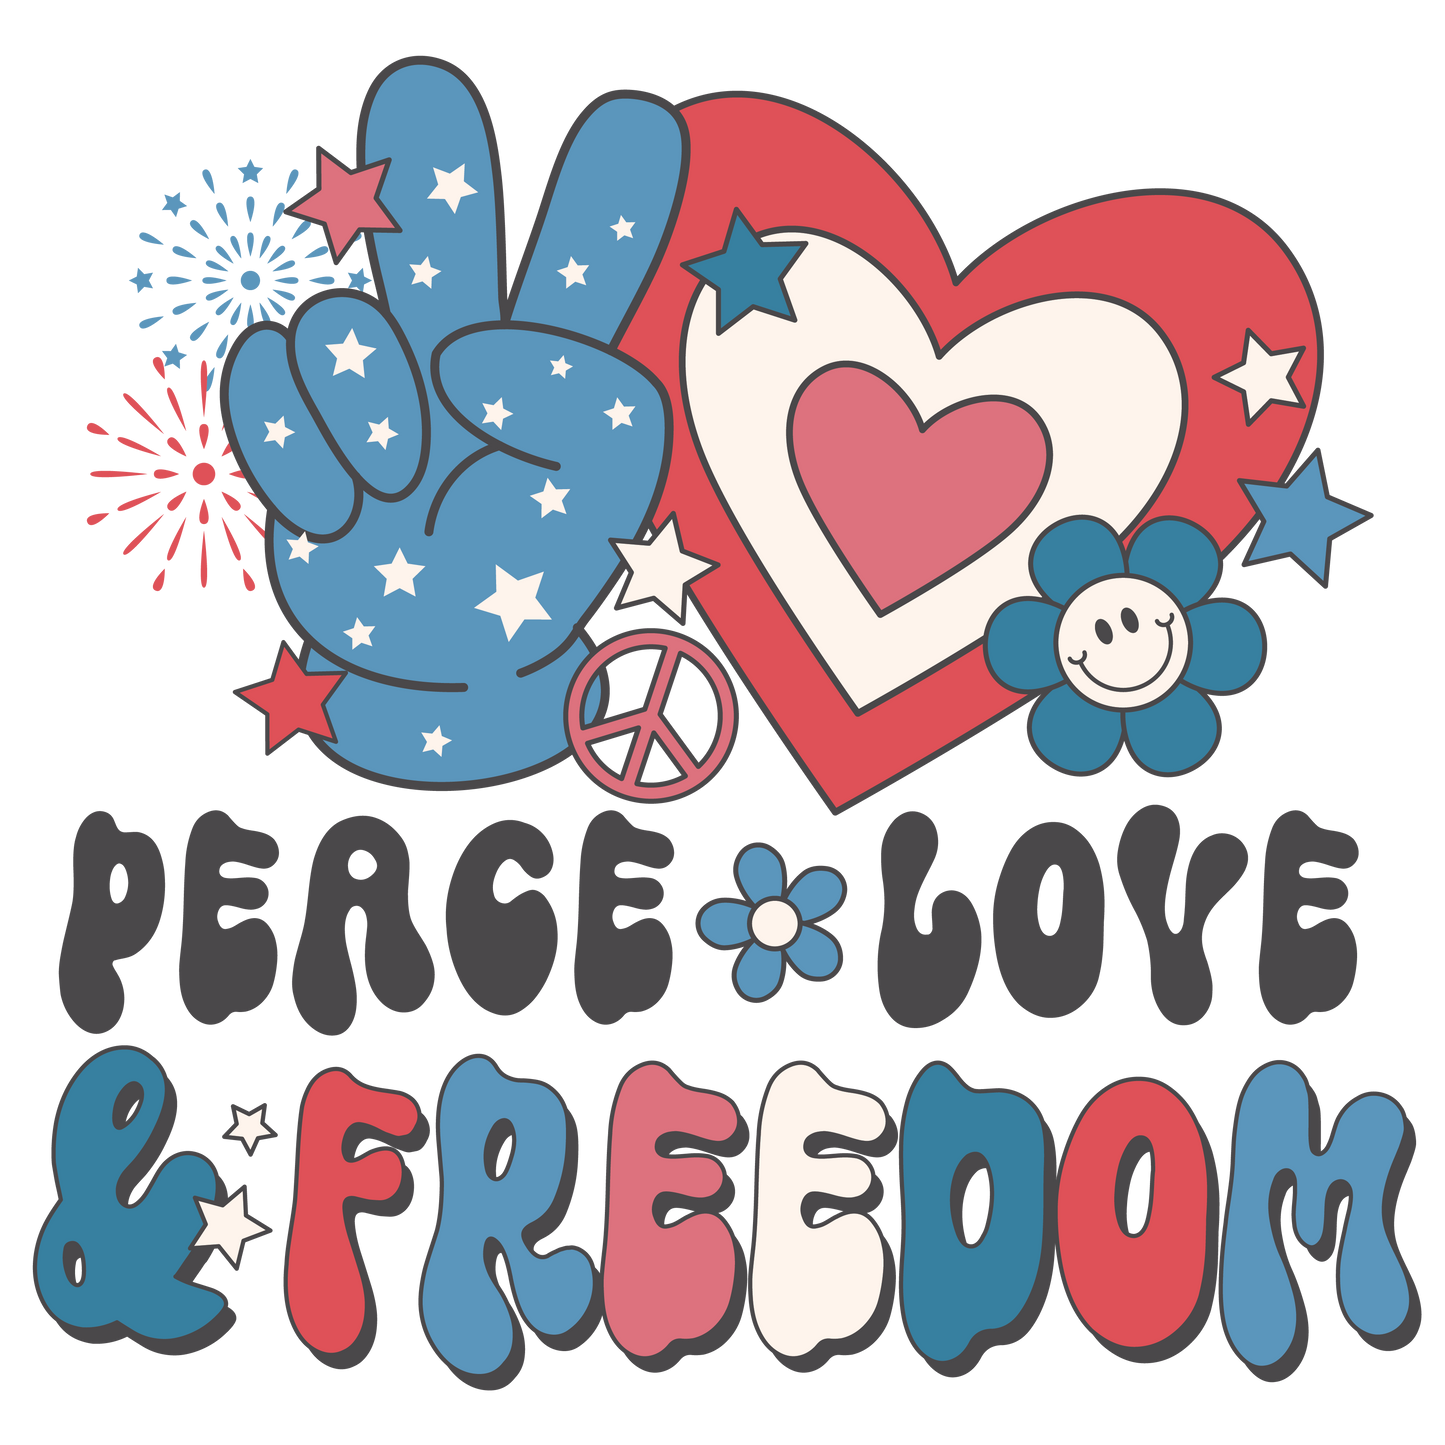 PEACE LOVE FREEDOM